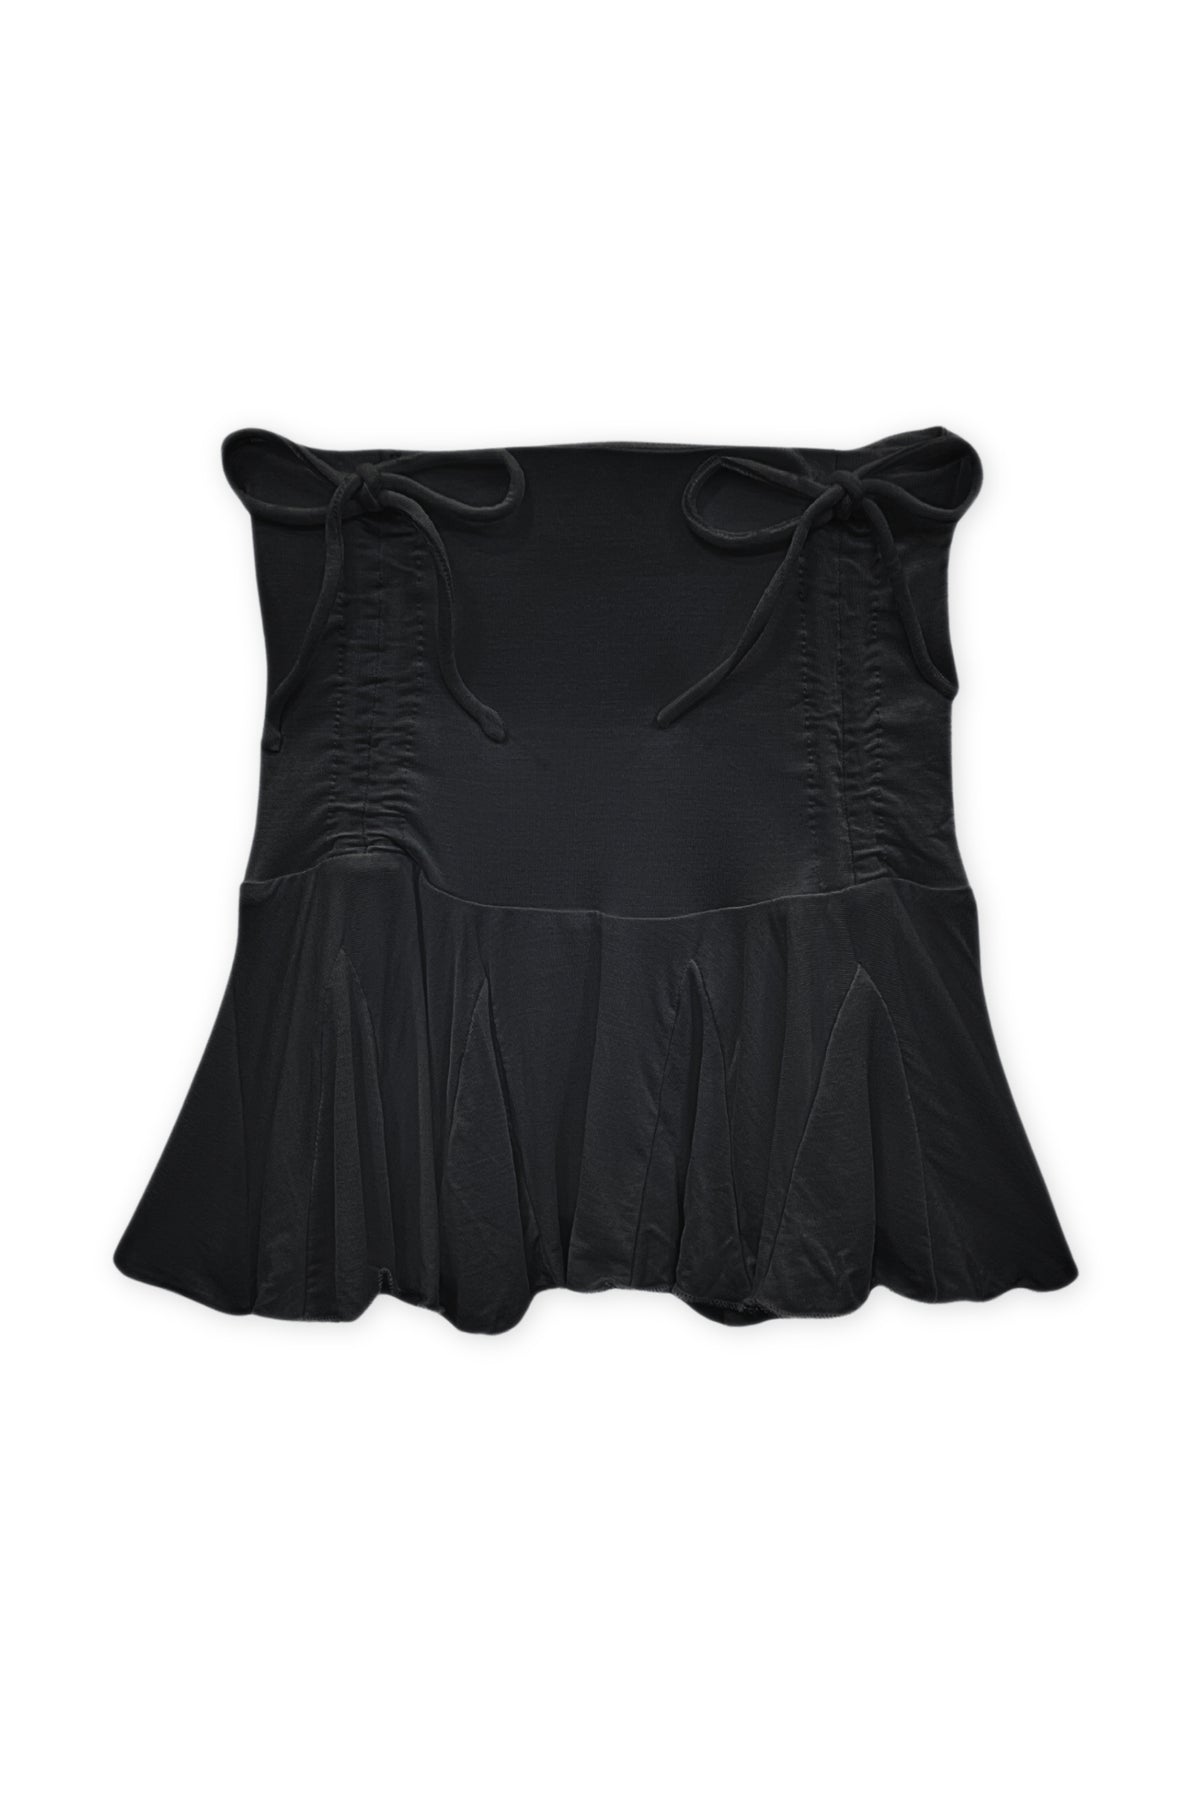 KatieJ NYC - Tween - Black Jax Solid Skirt